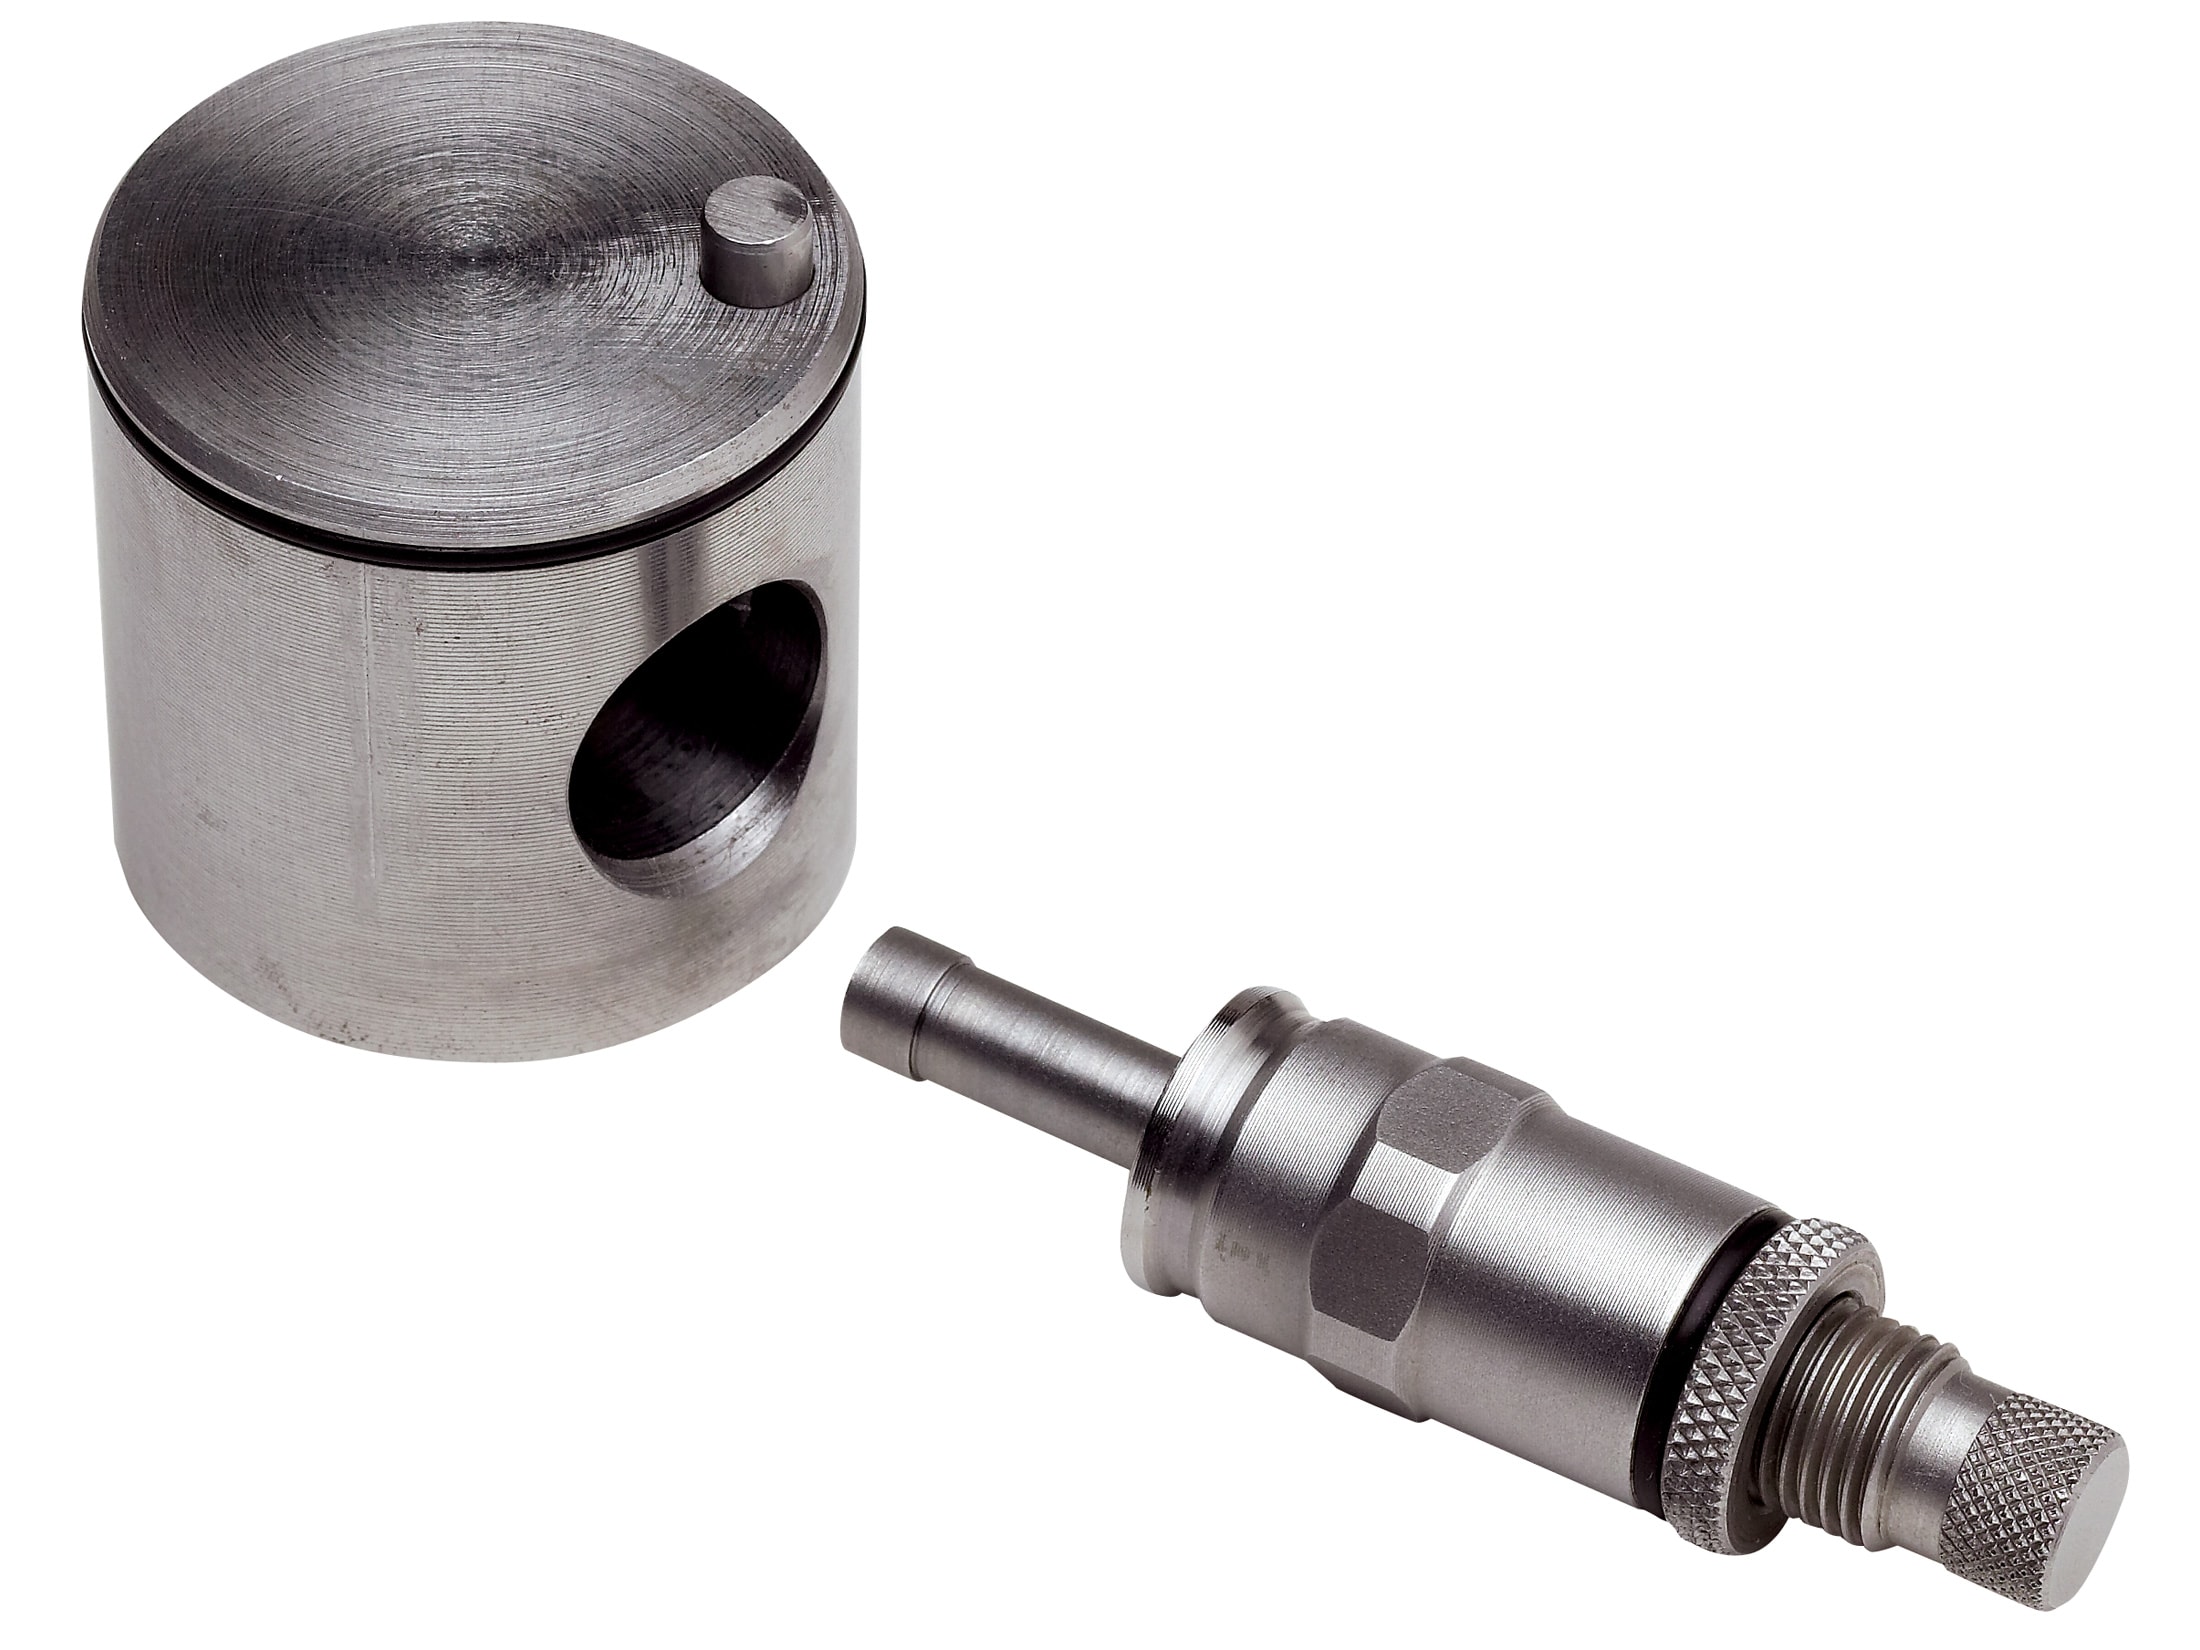 Hornady Lock-N-Load Powder Measure Handgun Rotor Metering Assembly